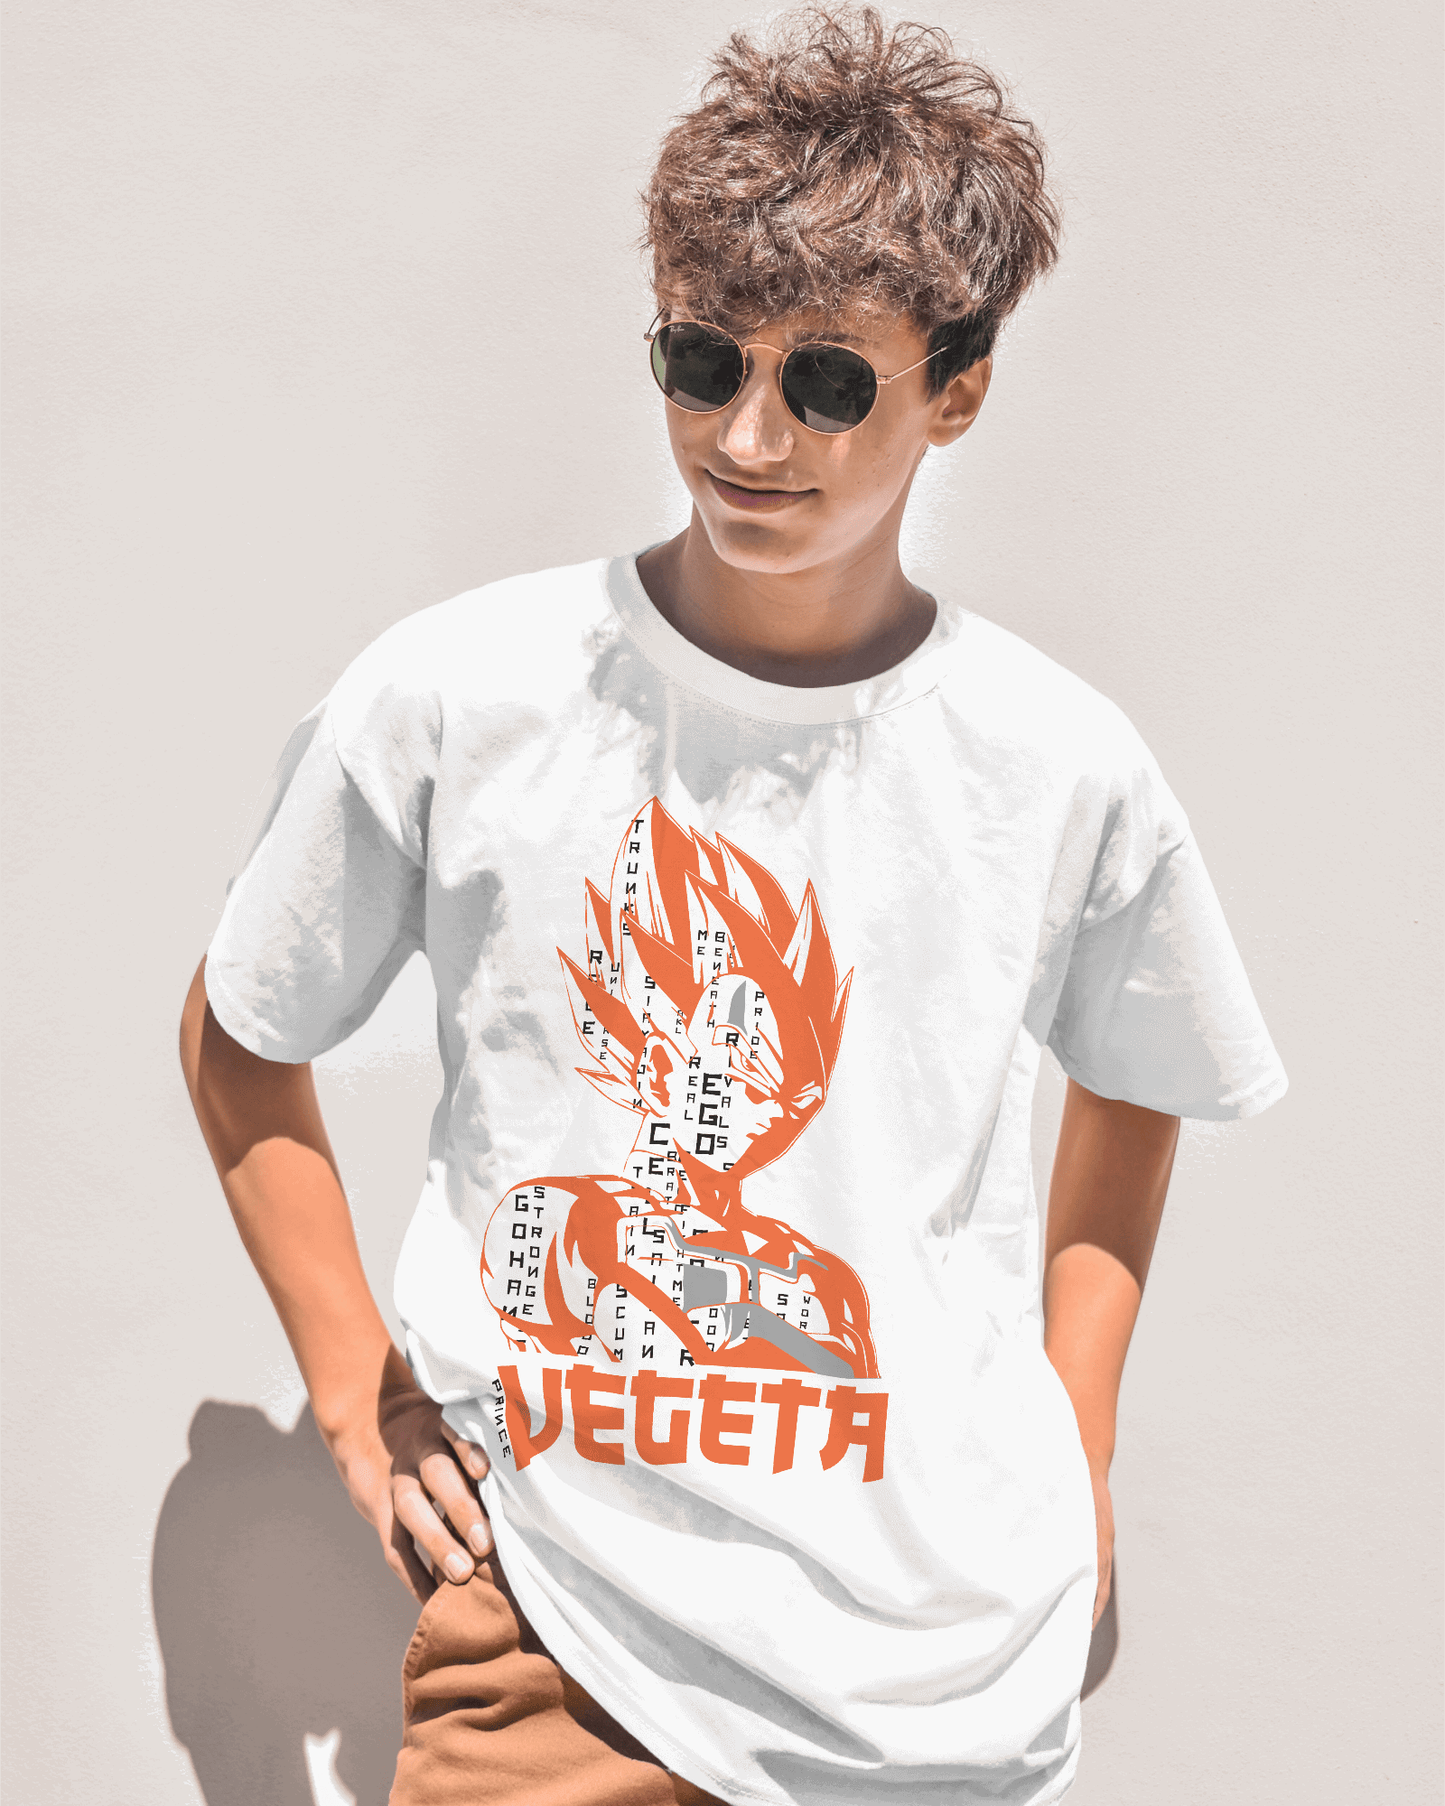 Prince Vegeta | White DBZ Oversized Front Back Tshirt